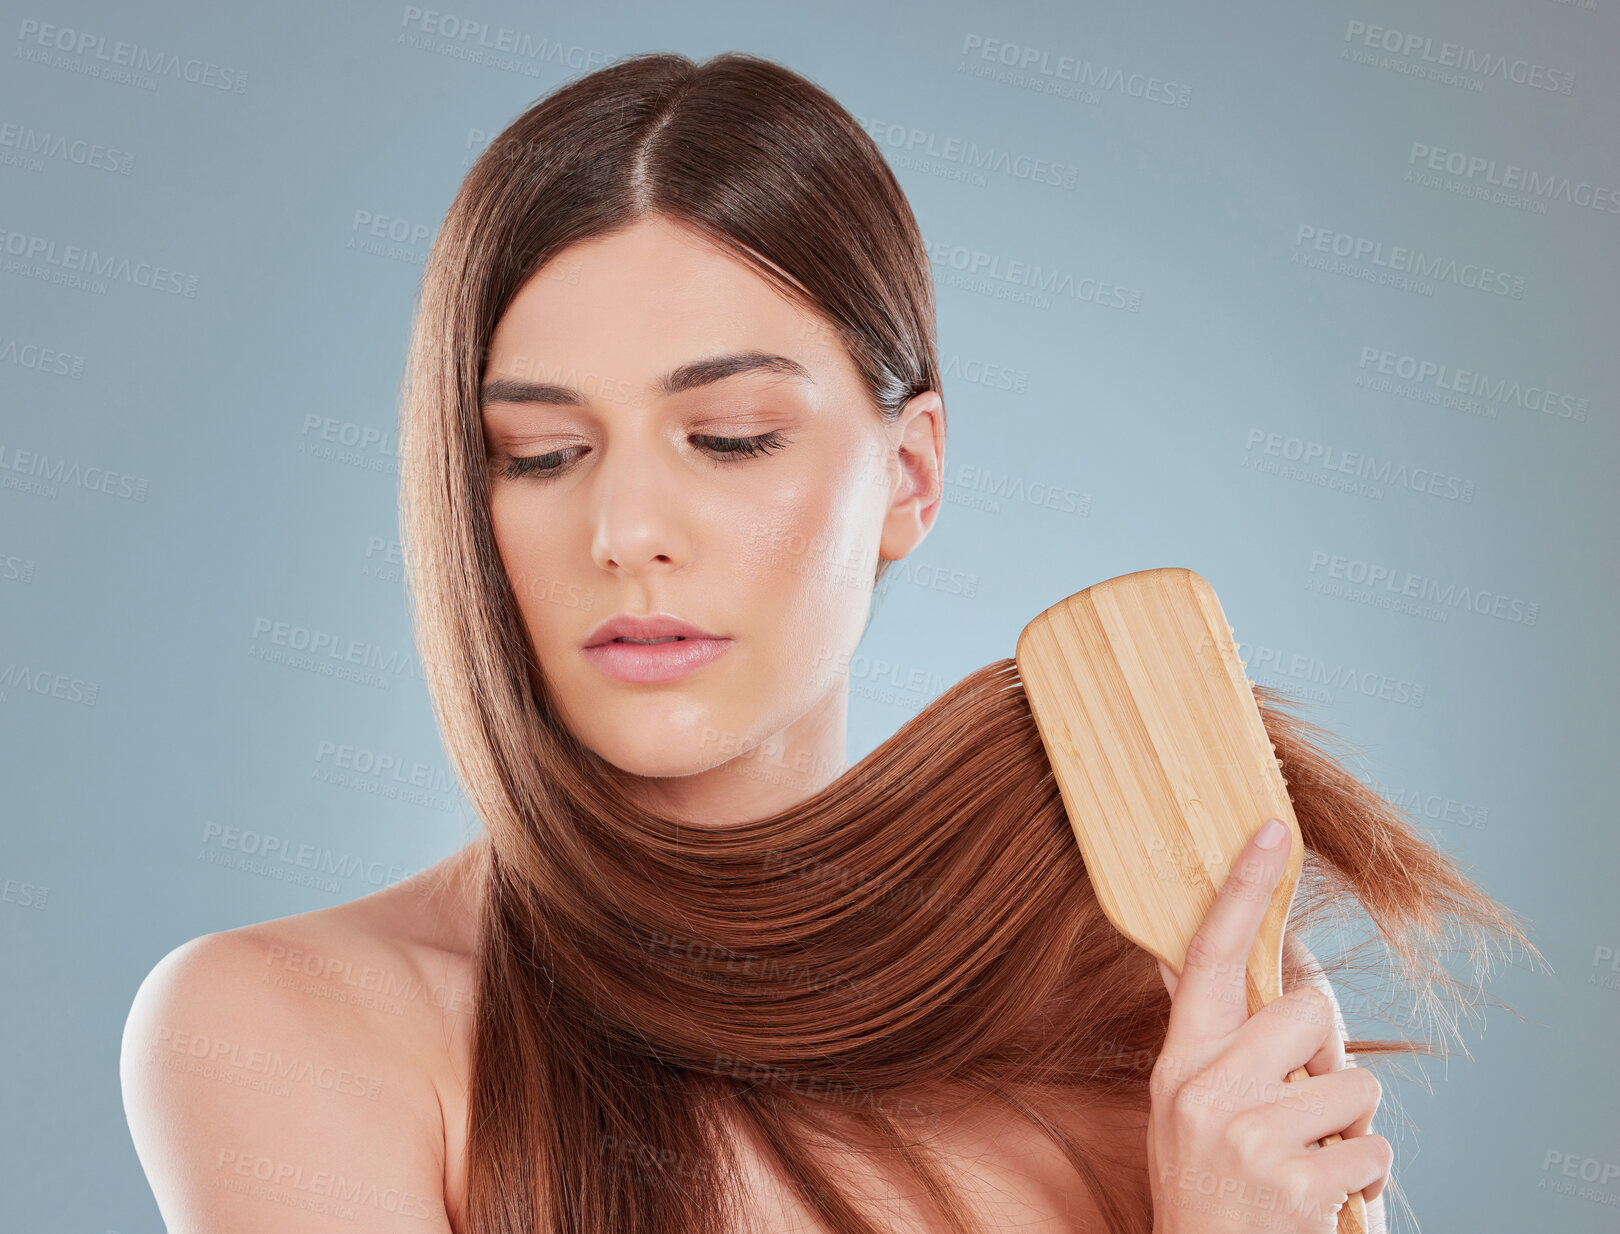 Buy stock photo Studio shot of a young woman brushing her hair